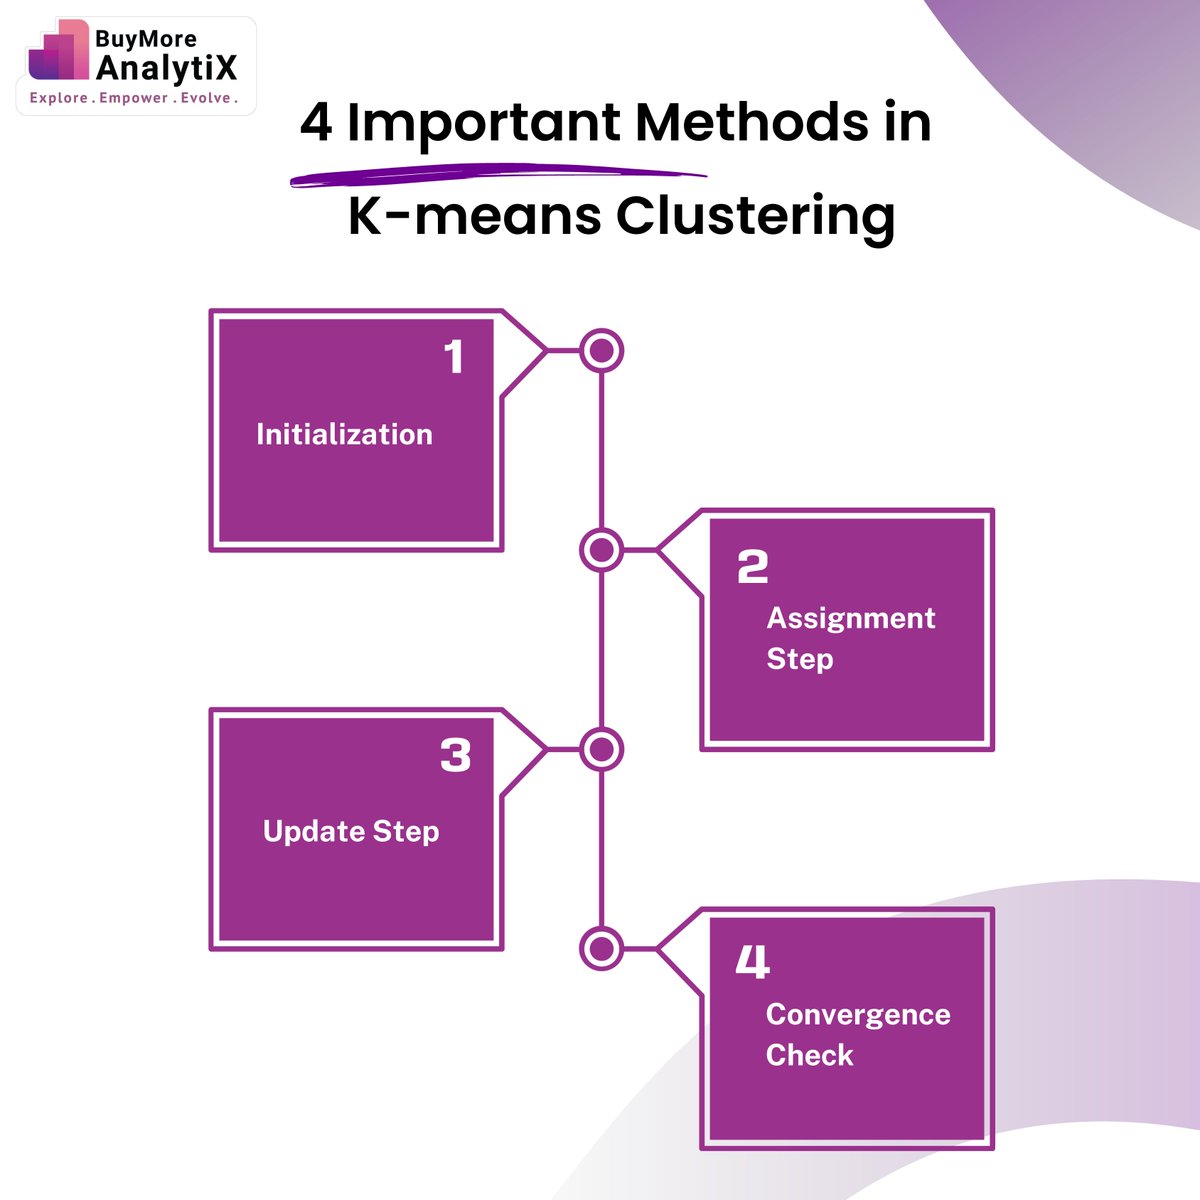 Four Important Methods in K-means Clustering! 📉

#KMeans #Clustering #DataAnalysis #MachineLearning #DataScience #UnsupervisedLearning #DataMining #DataClustering #Algorithm #DataAnalytics #PatternRecognition #StatisticalAnalysis #AI #BigData #MLAlgorithms #BuymoreAnalytix